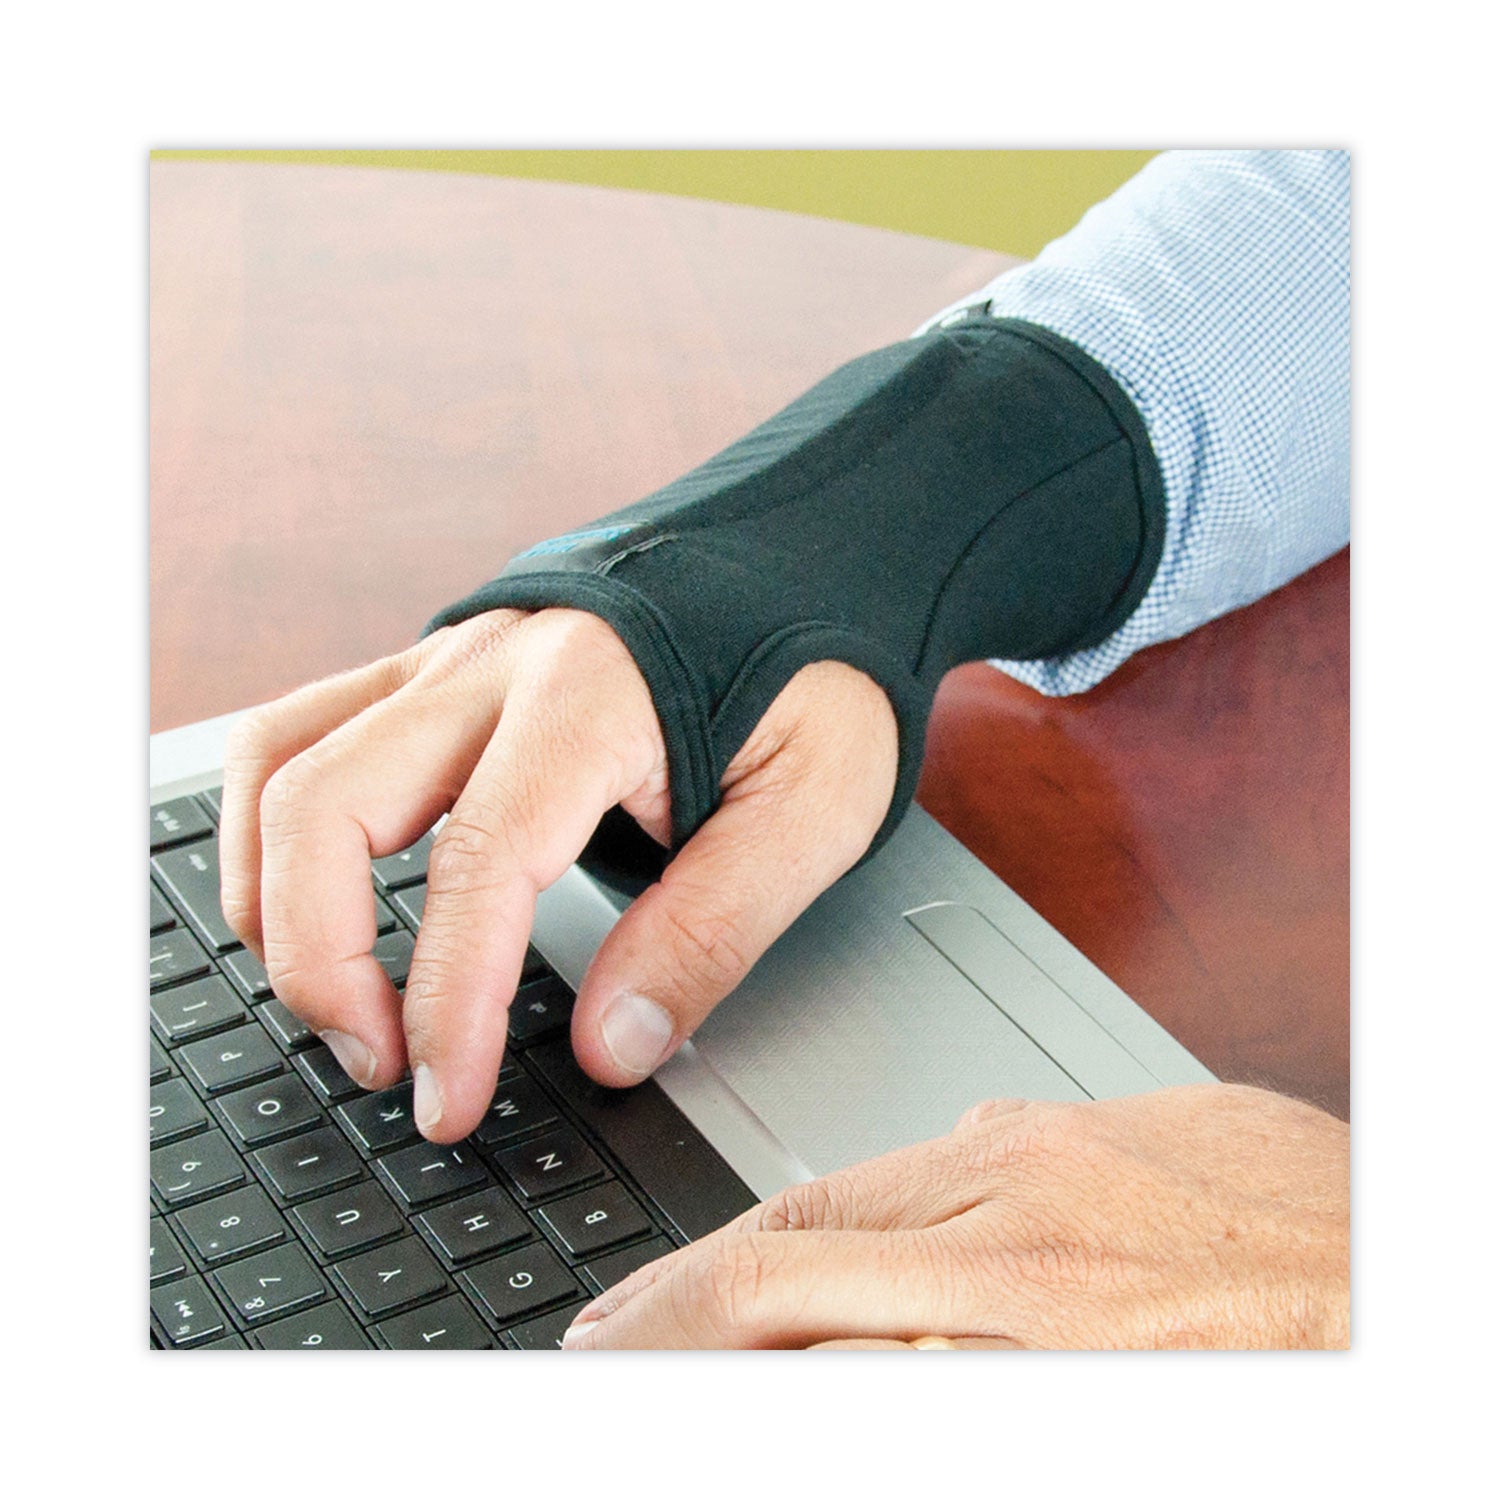 SmartGlove Wrist Wrap, Medium, Fits Hands Up to 3.75" Wide, Black - 